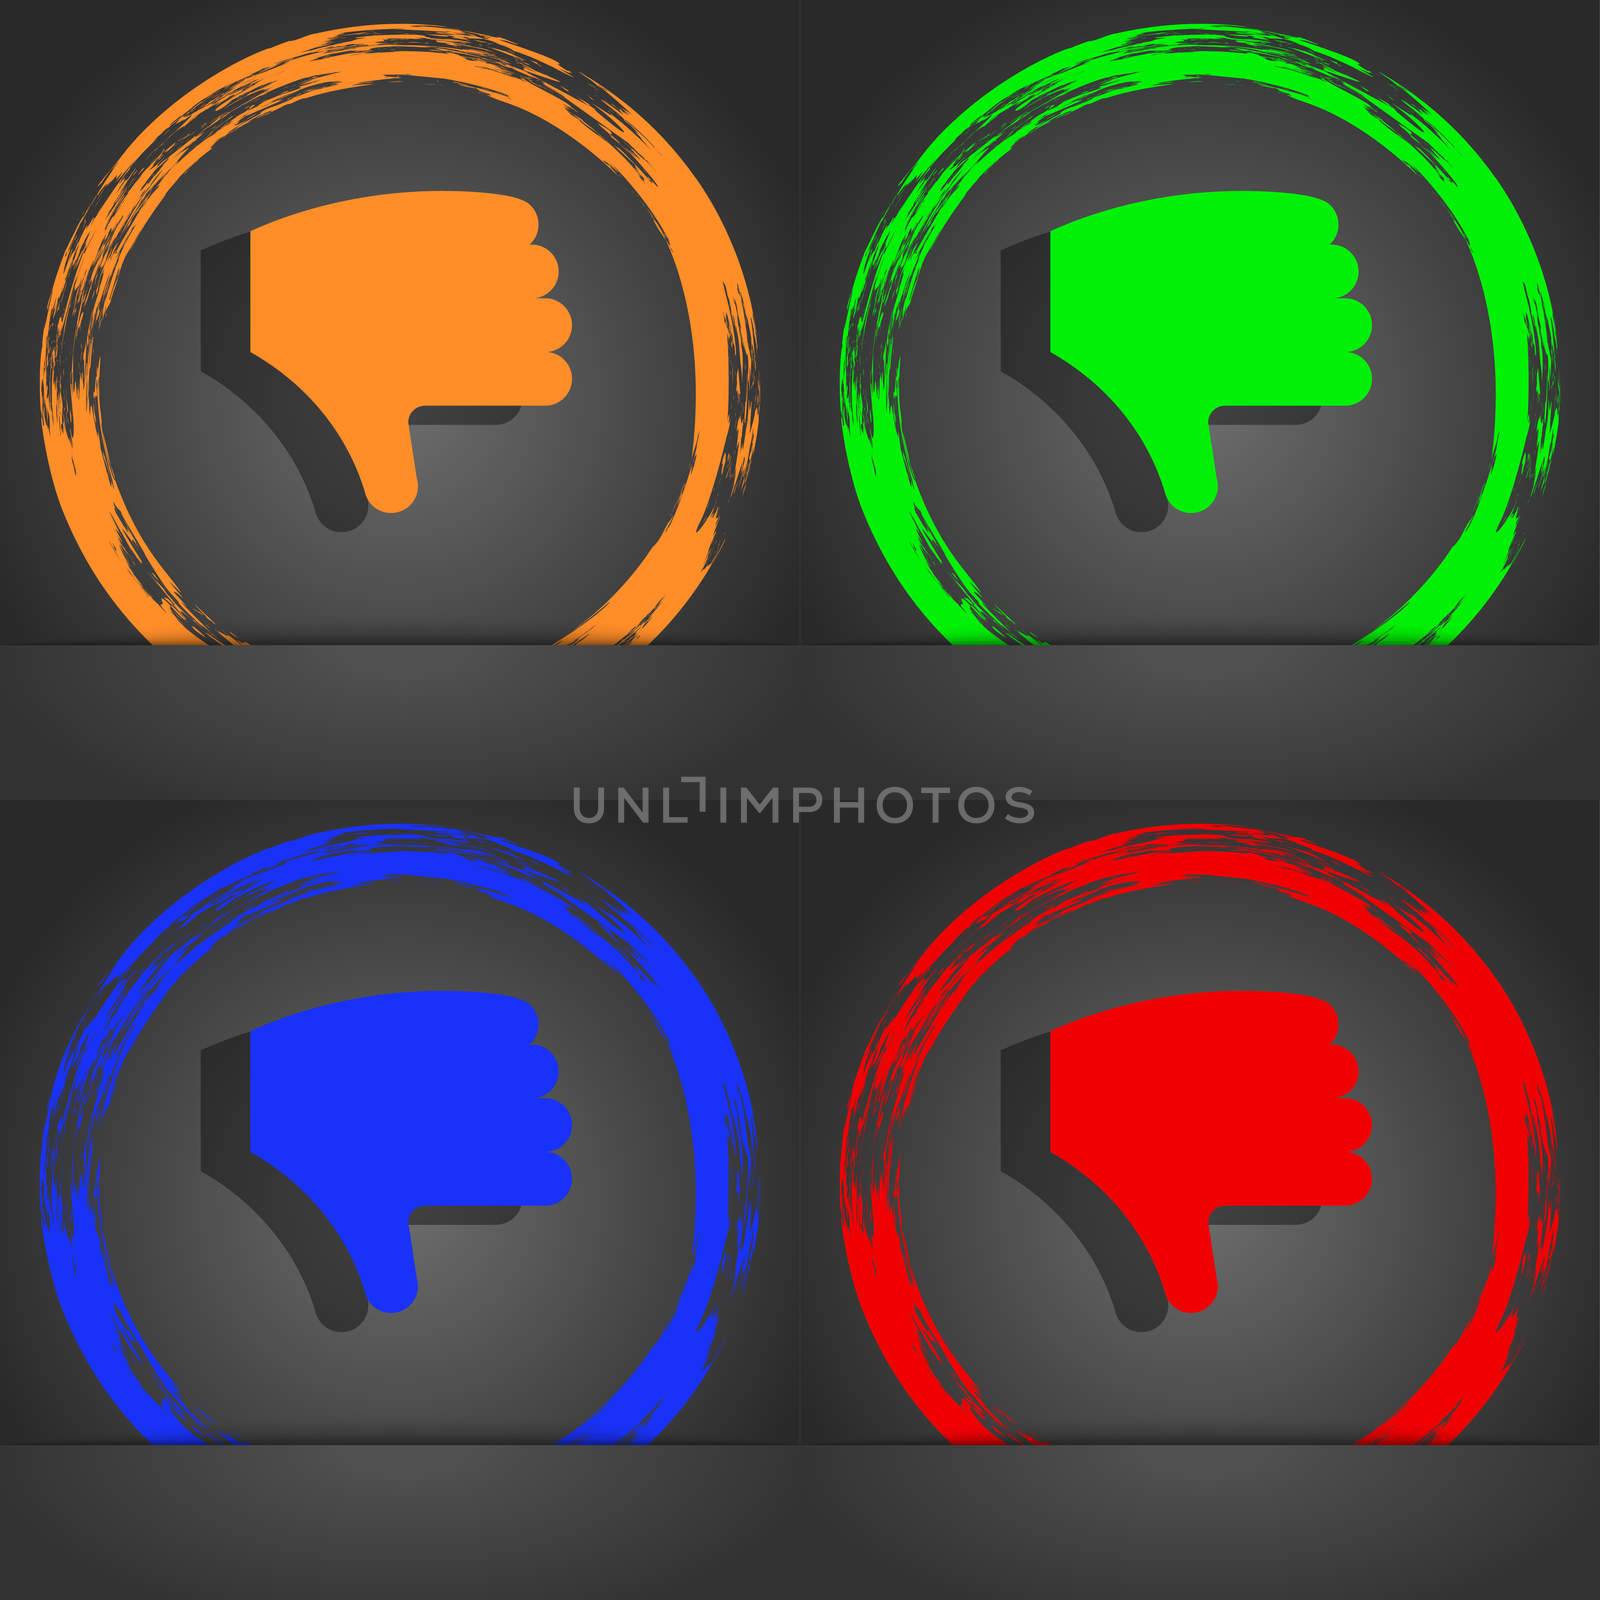 Dislike, Thumb down, Hand finger down icon symbol. Fashionable modern style. In the orange, green, blue, green design. illustration